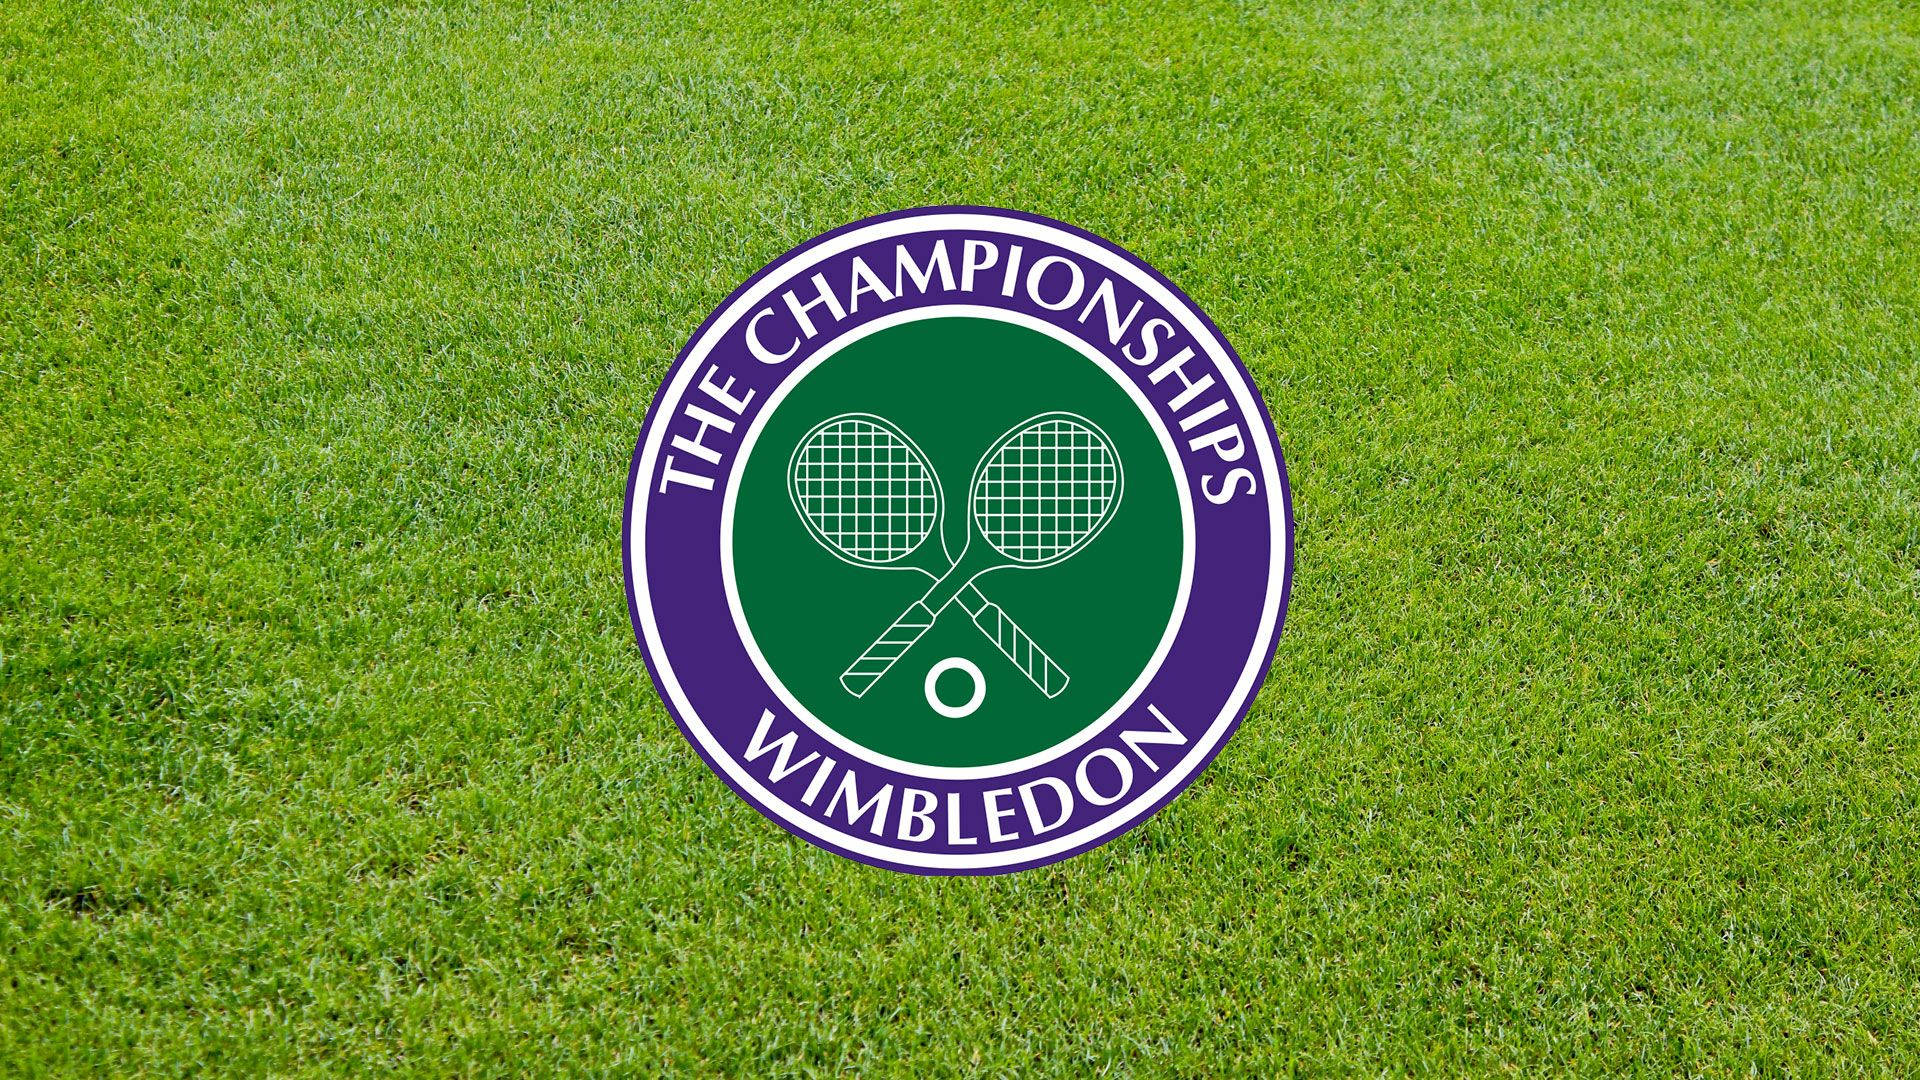 Wimbledon Logo Illustration In Grass Field